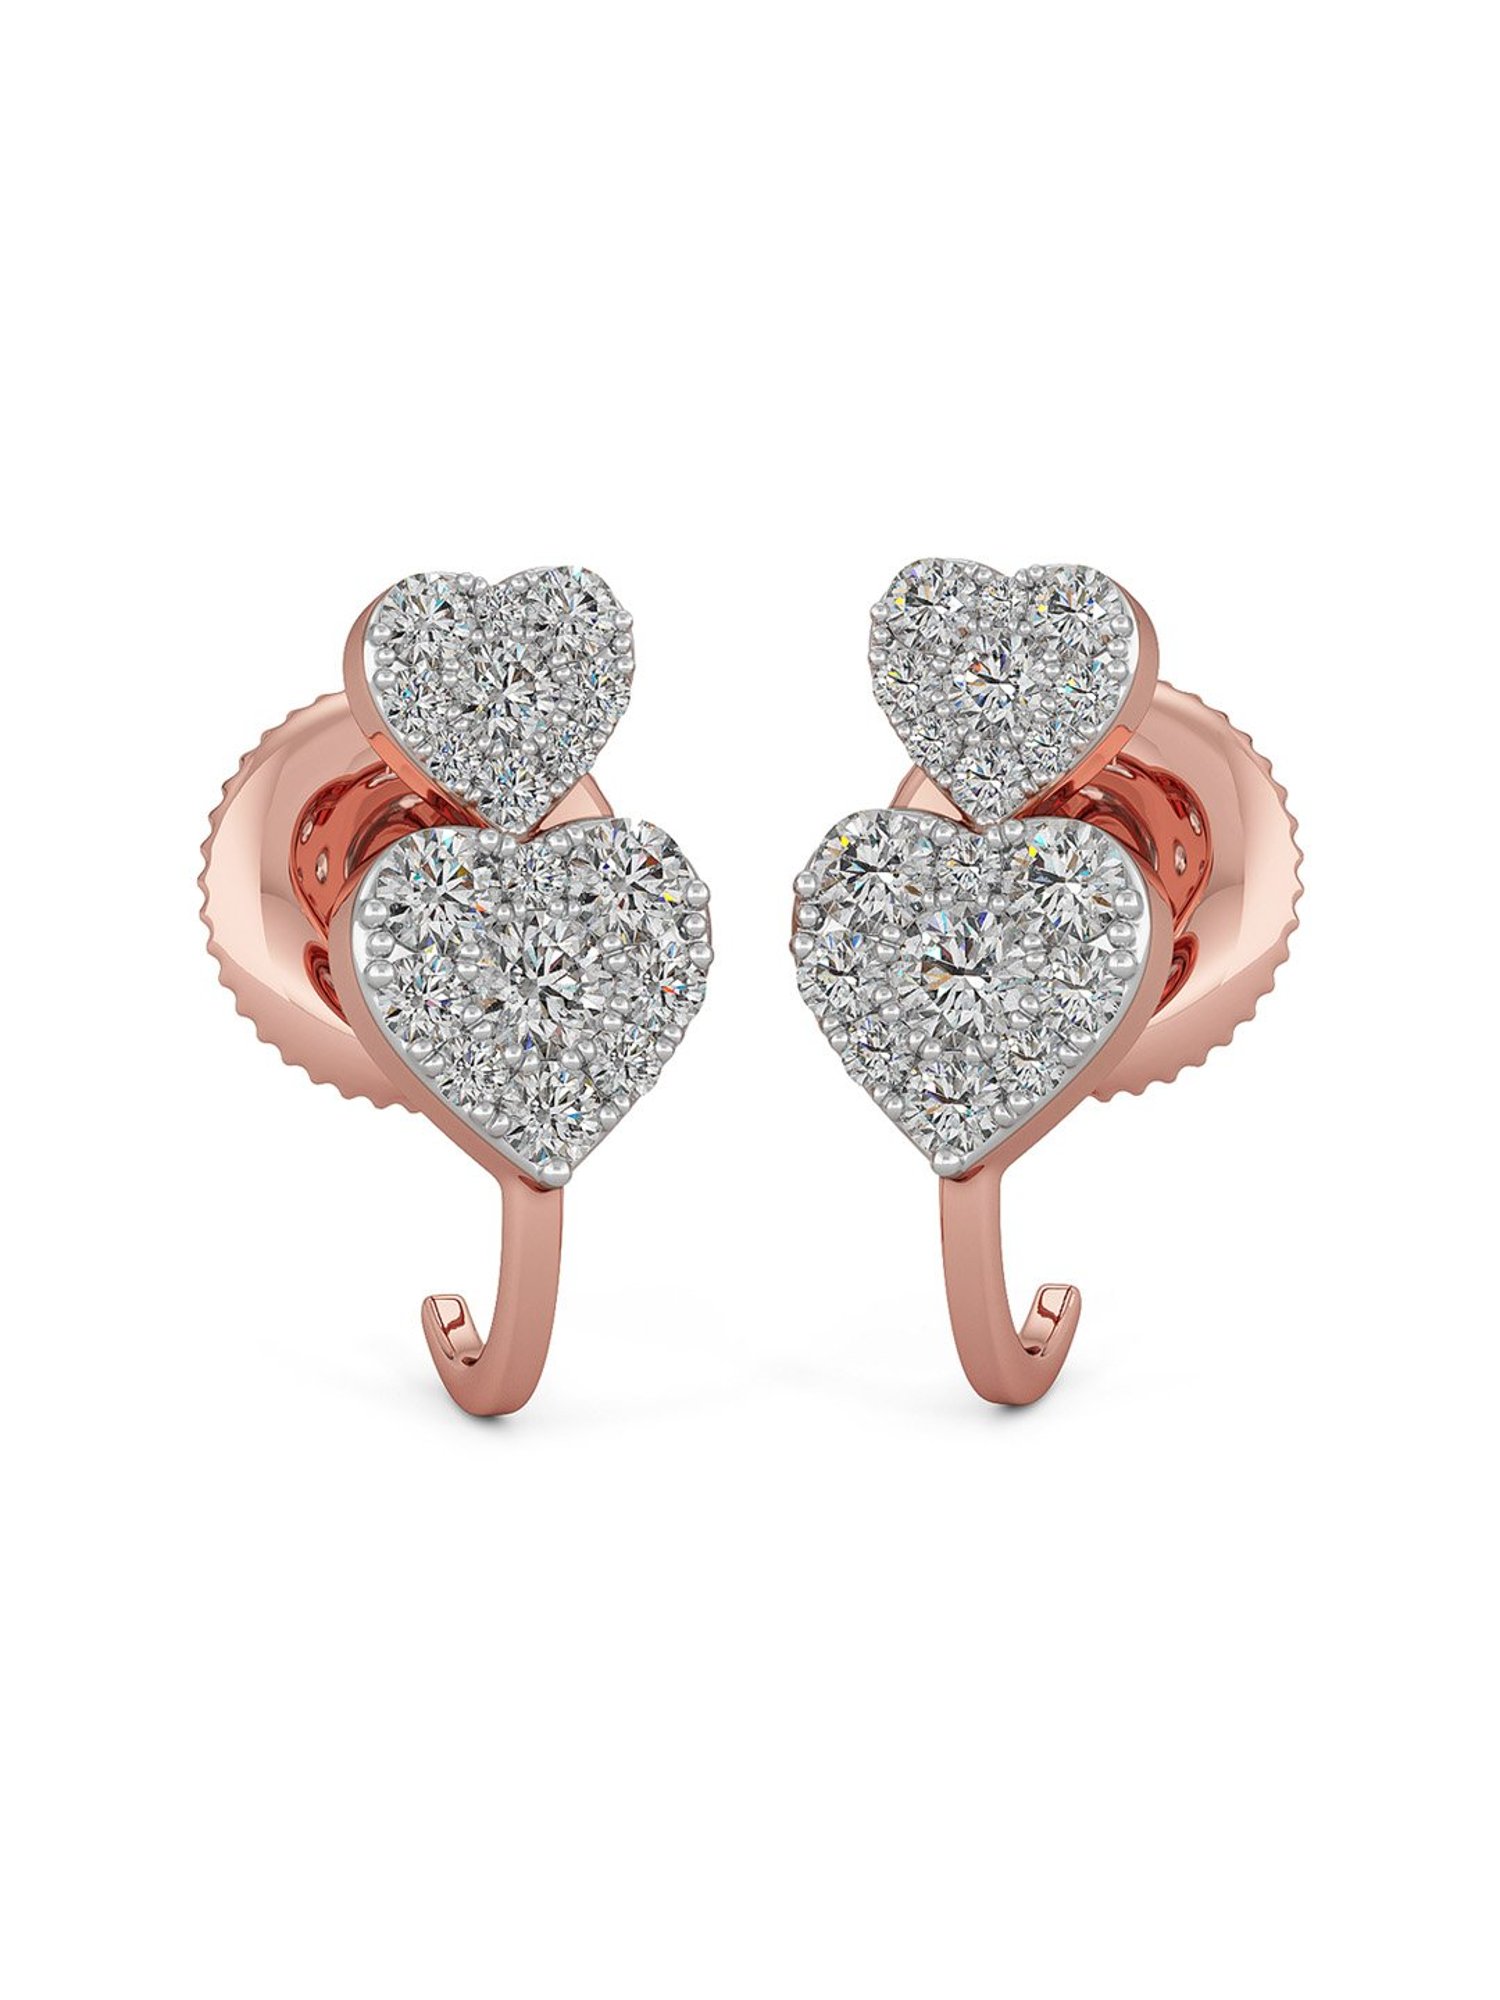 Joyalukkas 18k 750 Rose Gold and Solitaire Hoop Earrings for Girls   Amazonin Jewellery